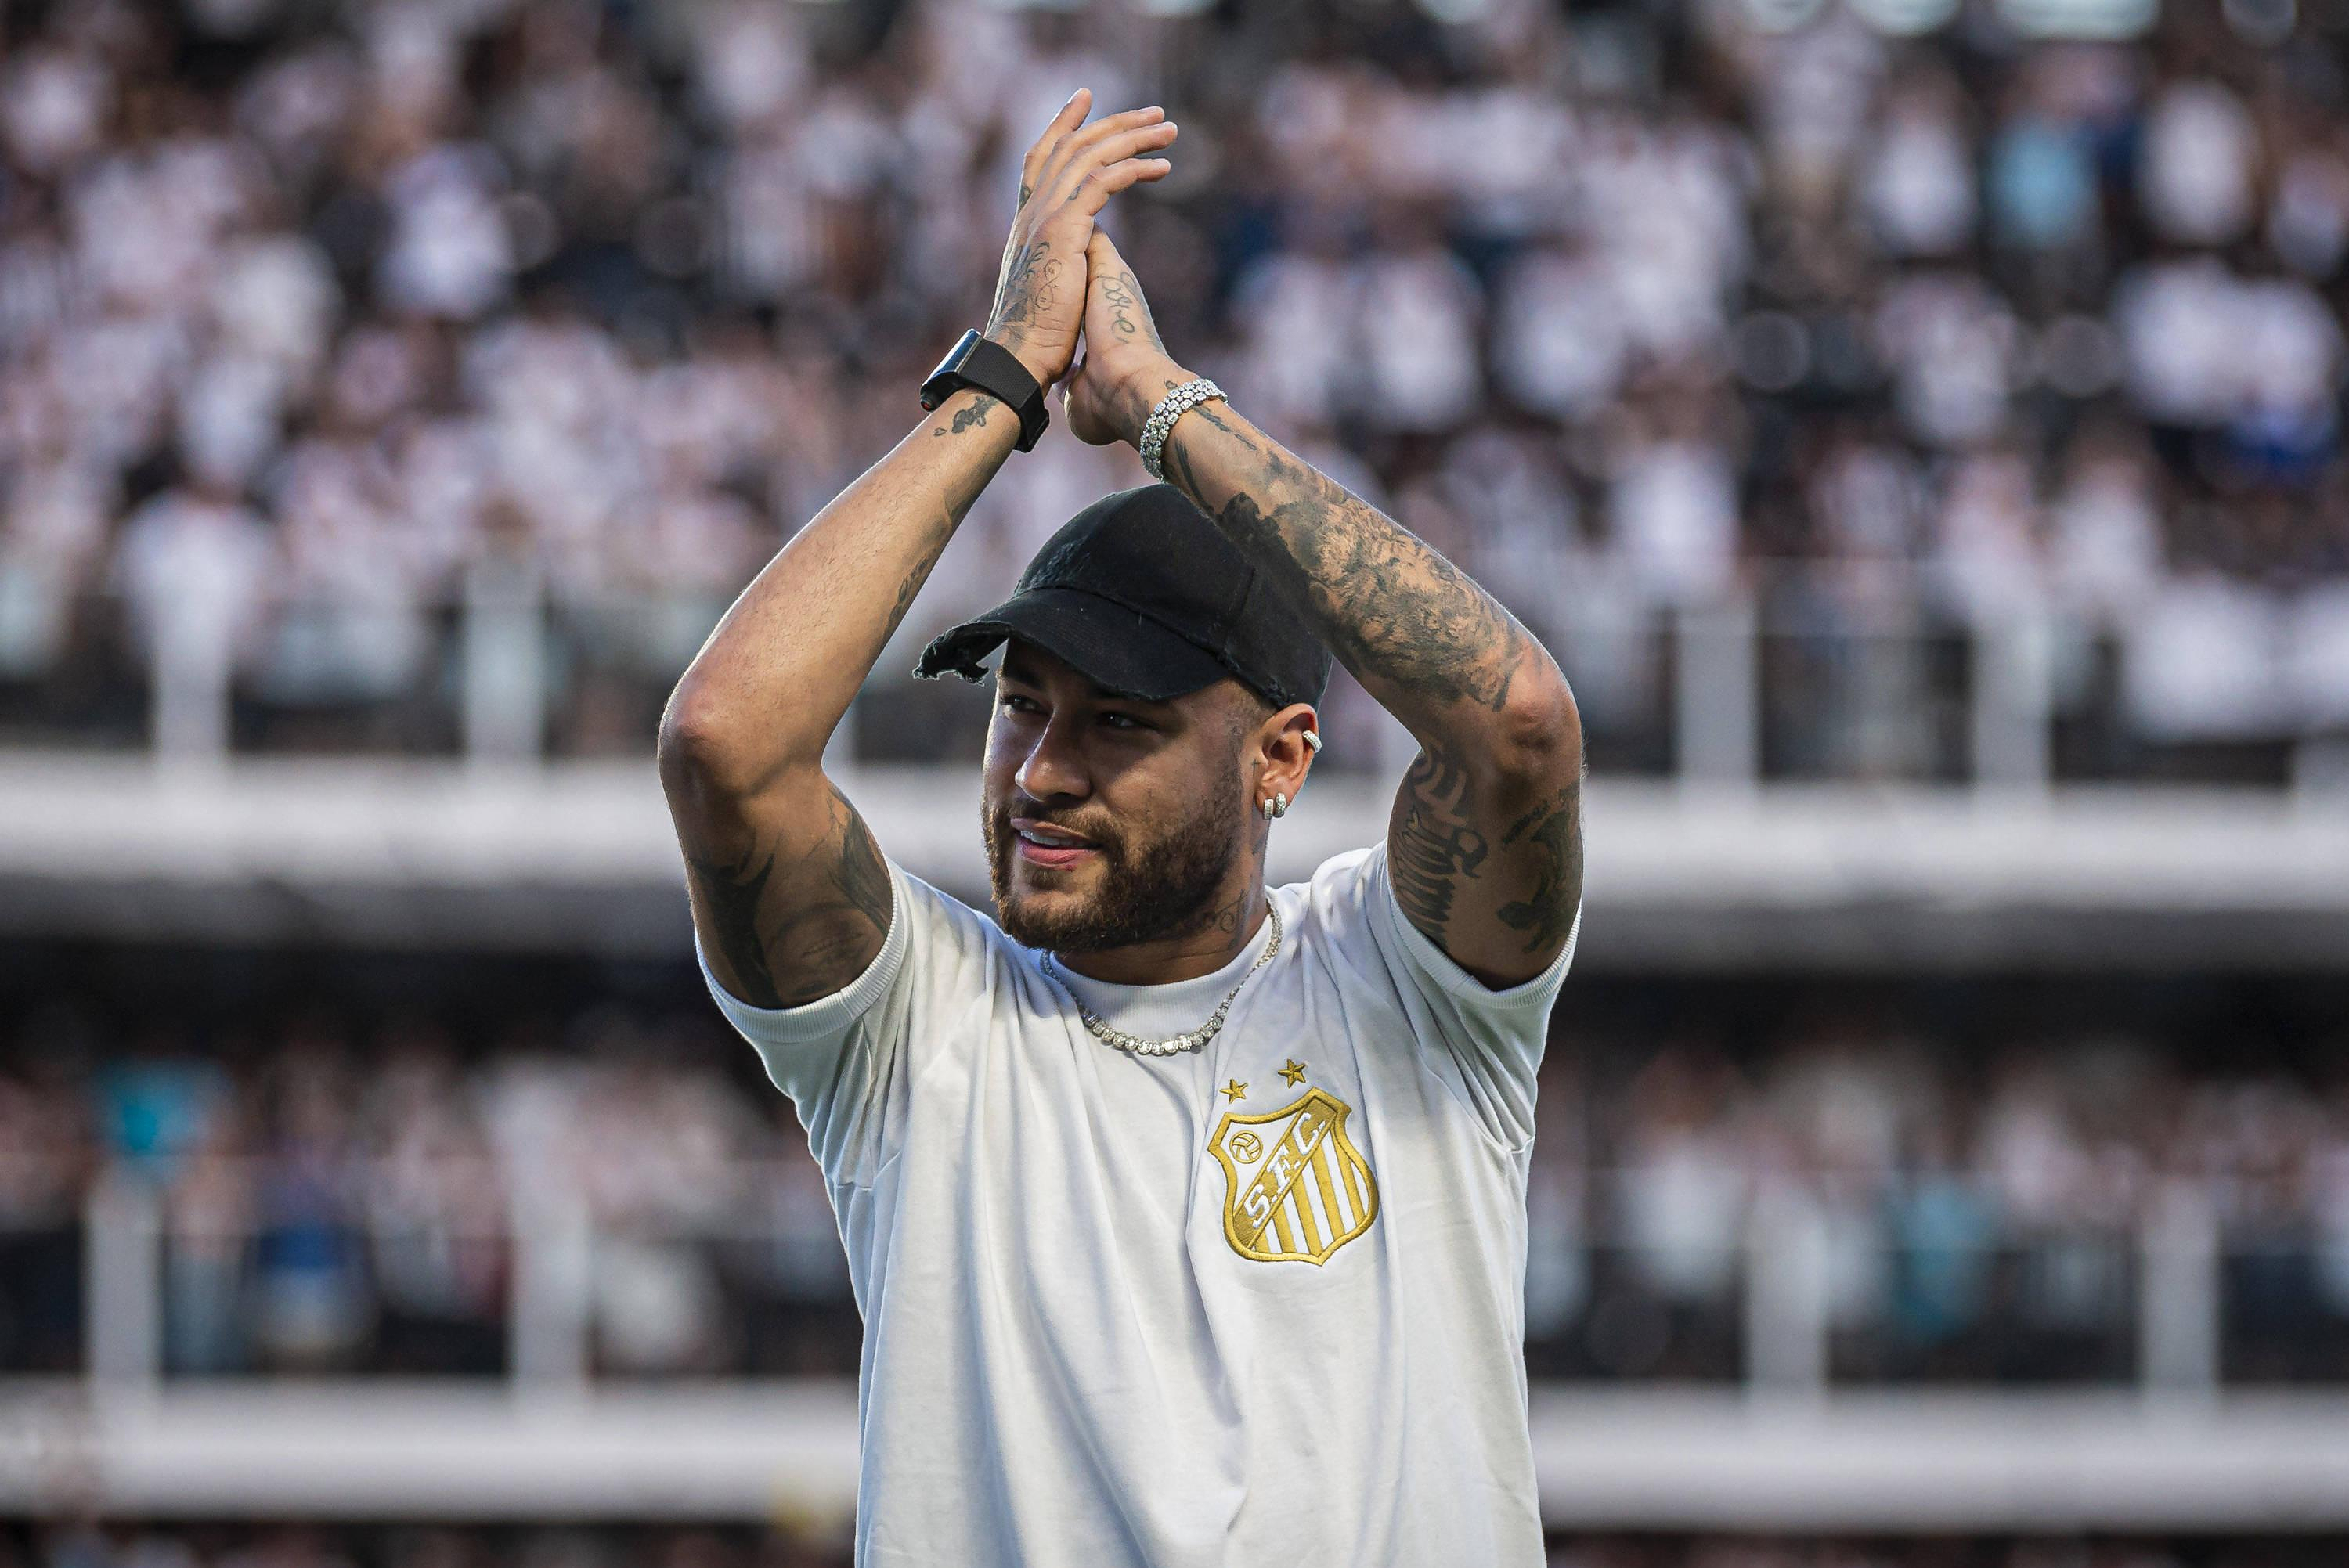 Mercato: Neymar, soon, back in Brazil?